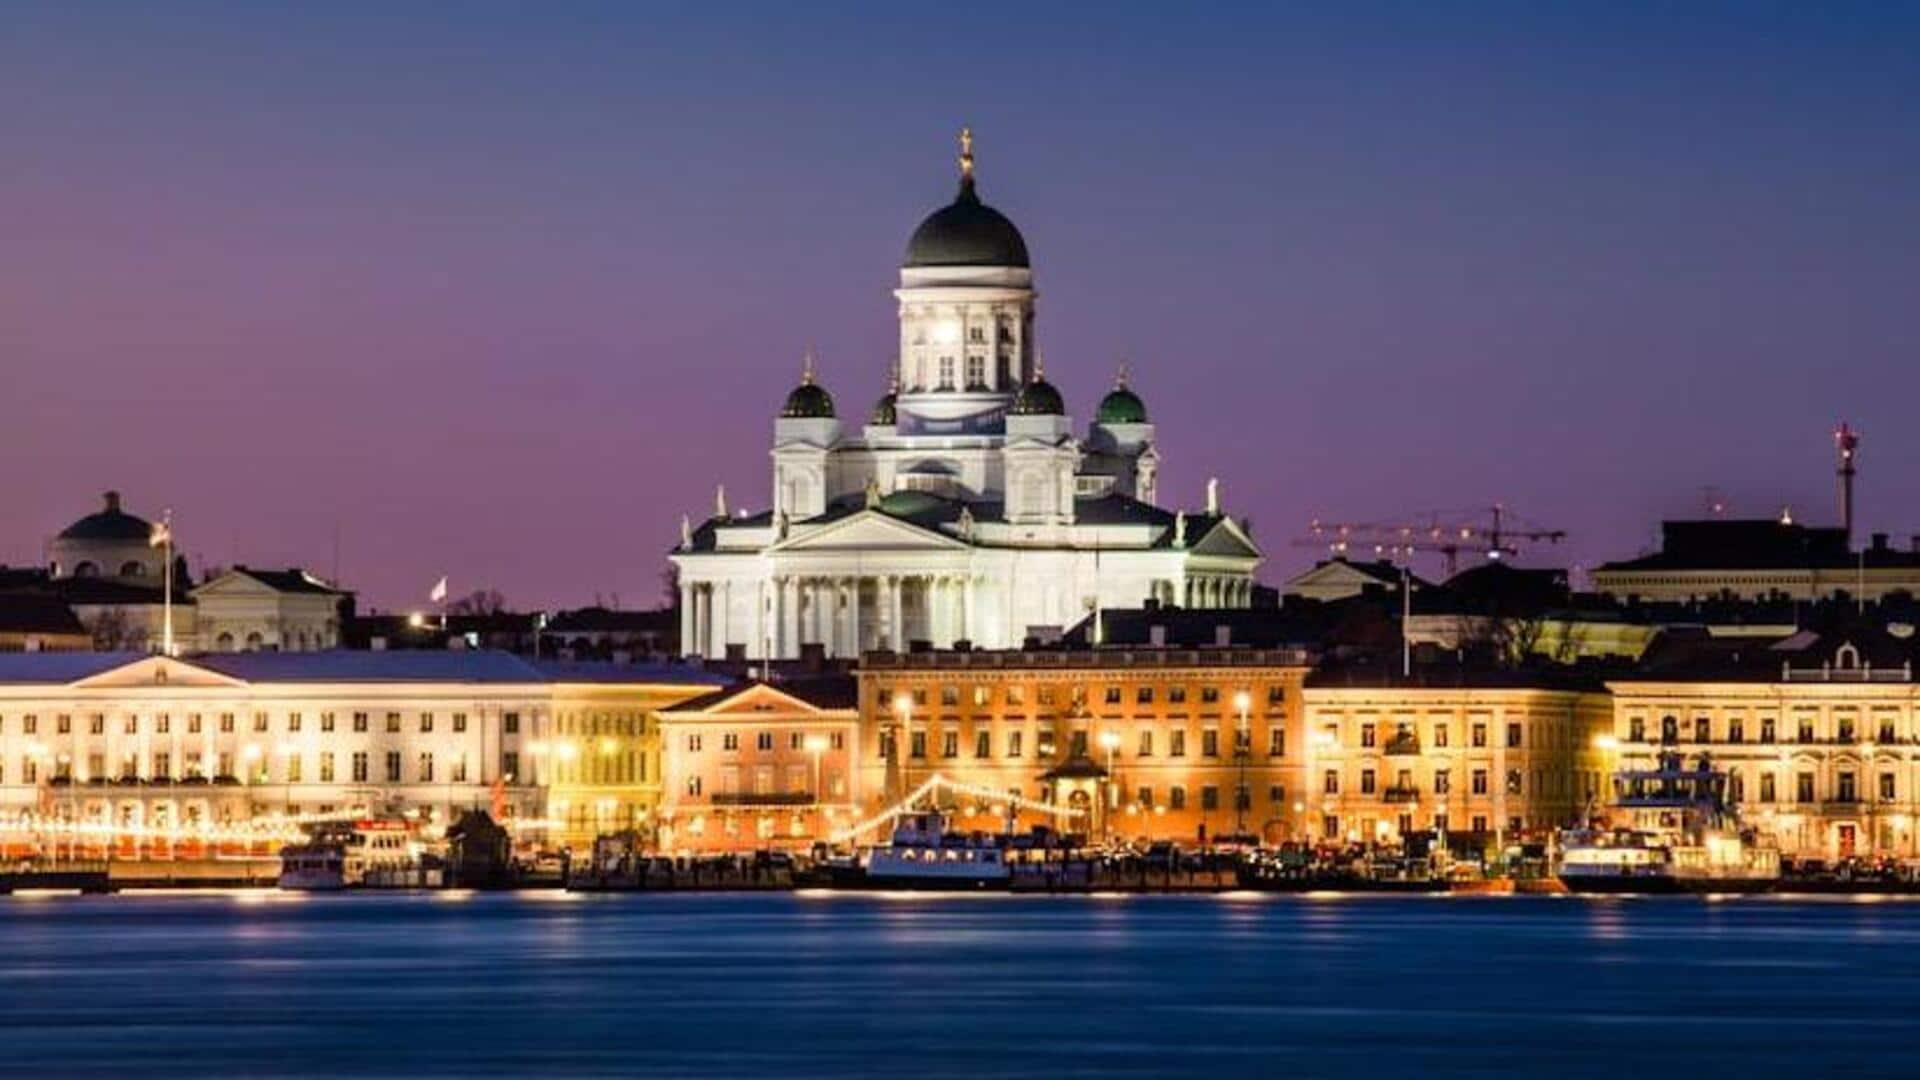 Hop on Helsinki's architectural marvels tour